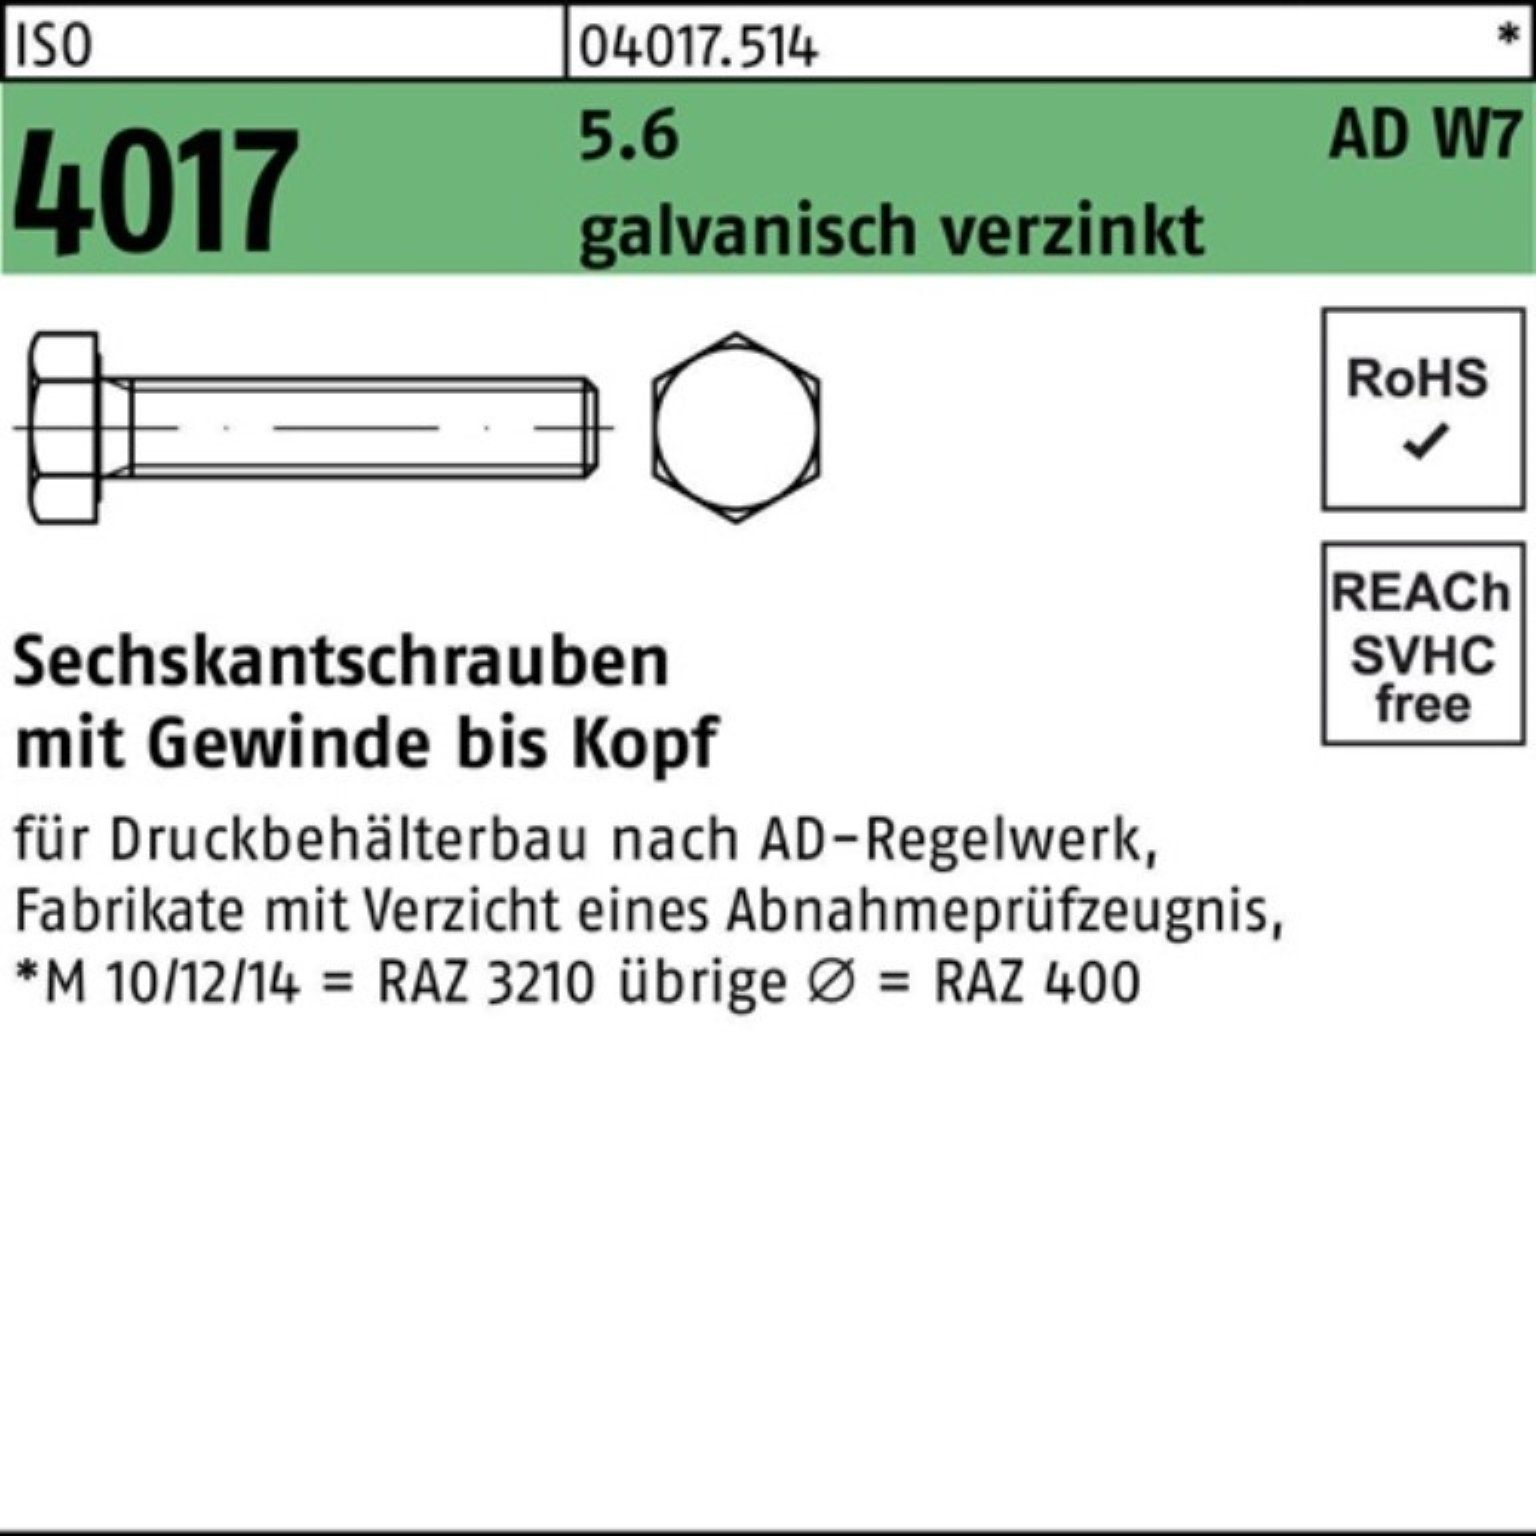 AD 4017 Pack Sechskantschraube M24x 80 W7 VG ISO Bufab 5.6 100er galv.verz. Sechskantschraube